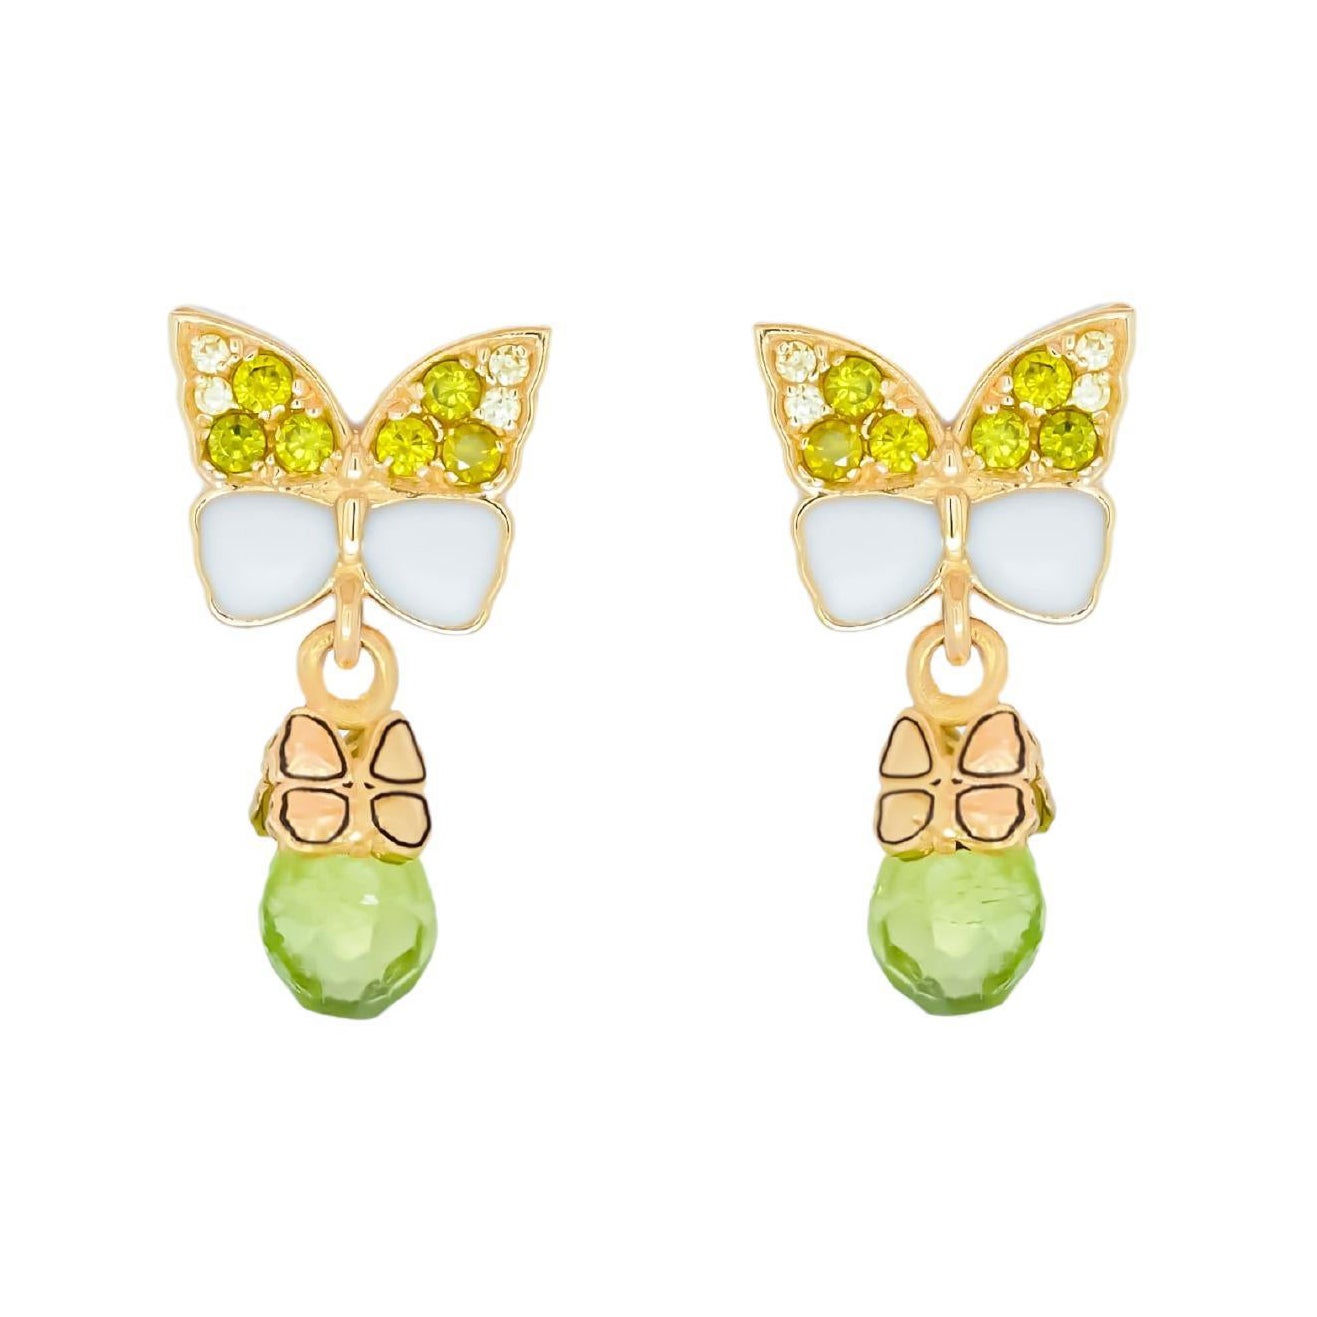 Butterfly 14k  gold earrings with peridot briolettes